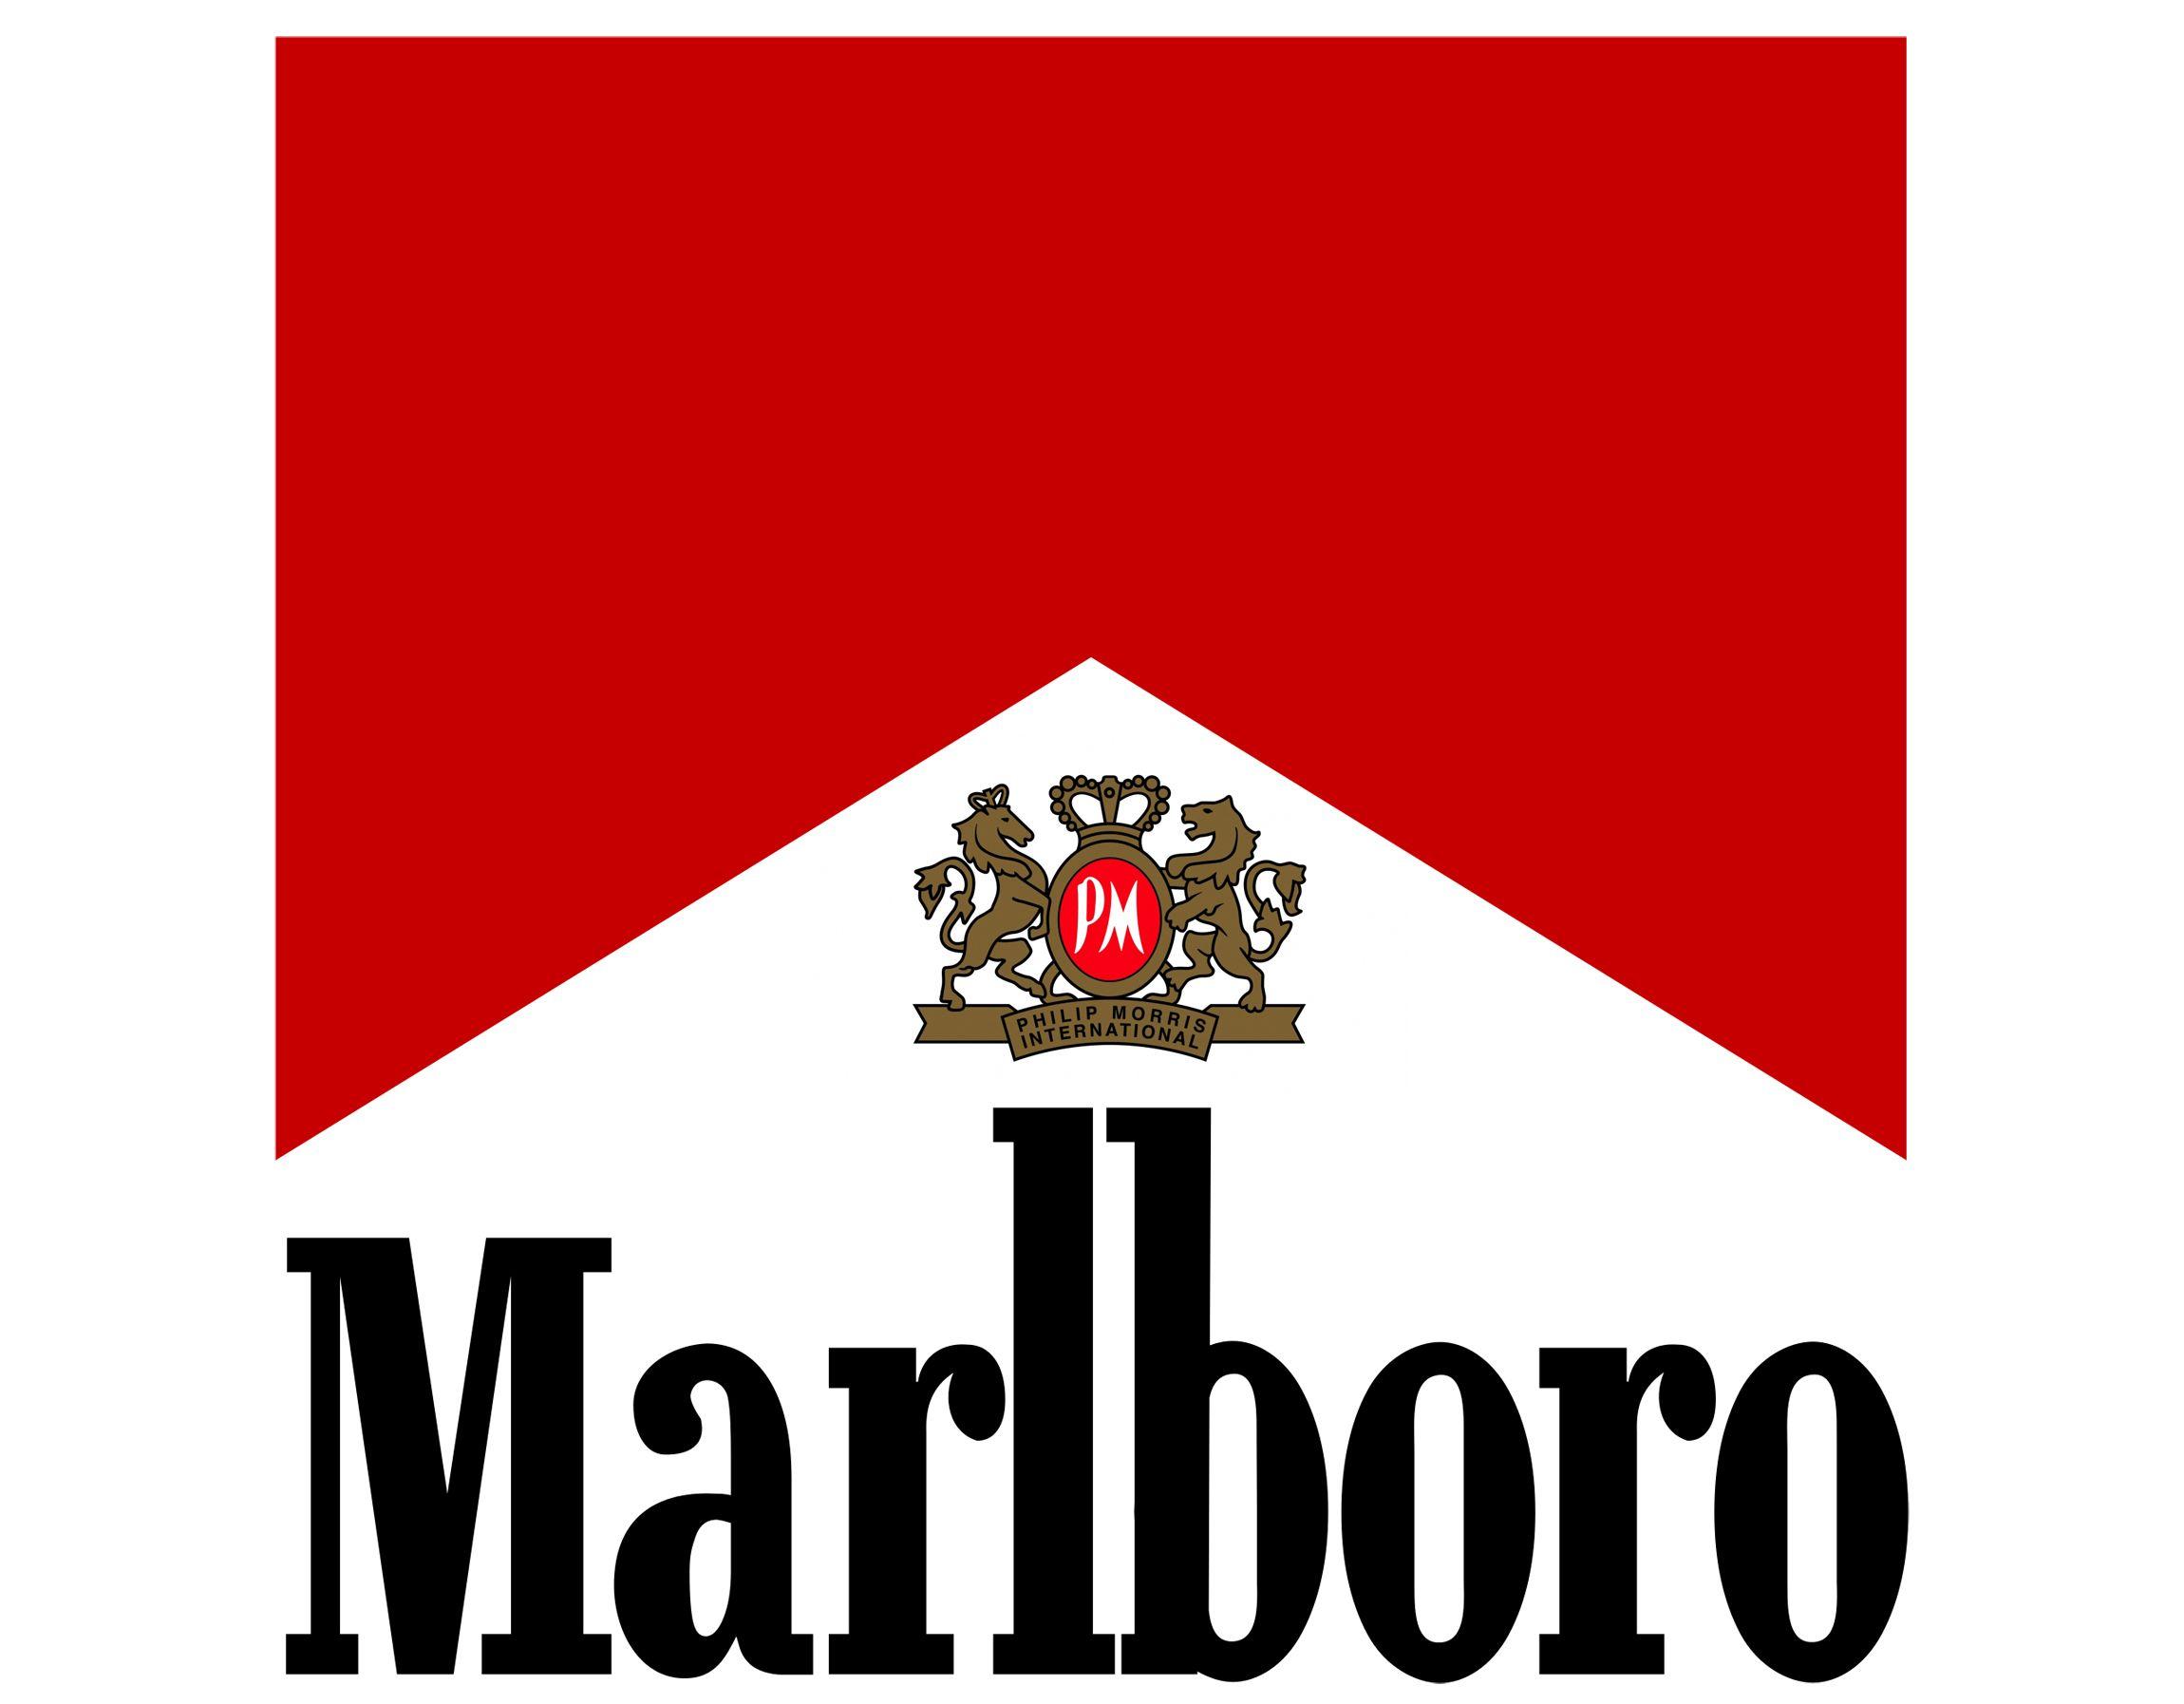 Philip Morris Tobacco Logo - Marlboro Logo, symbol, meaning, History and Evolution